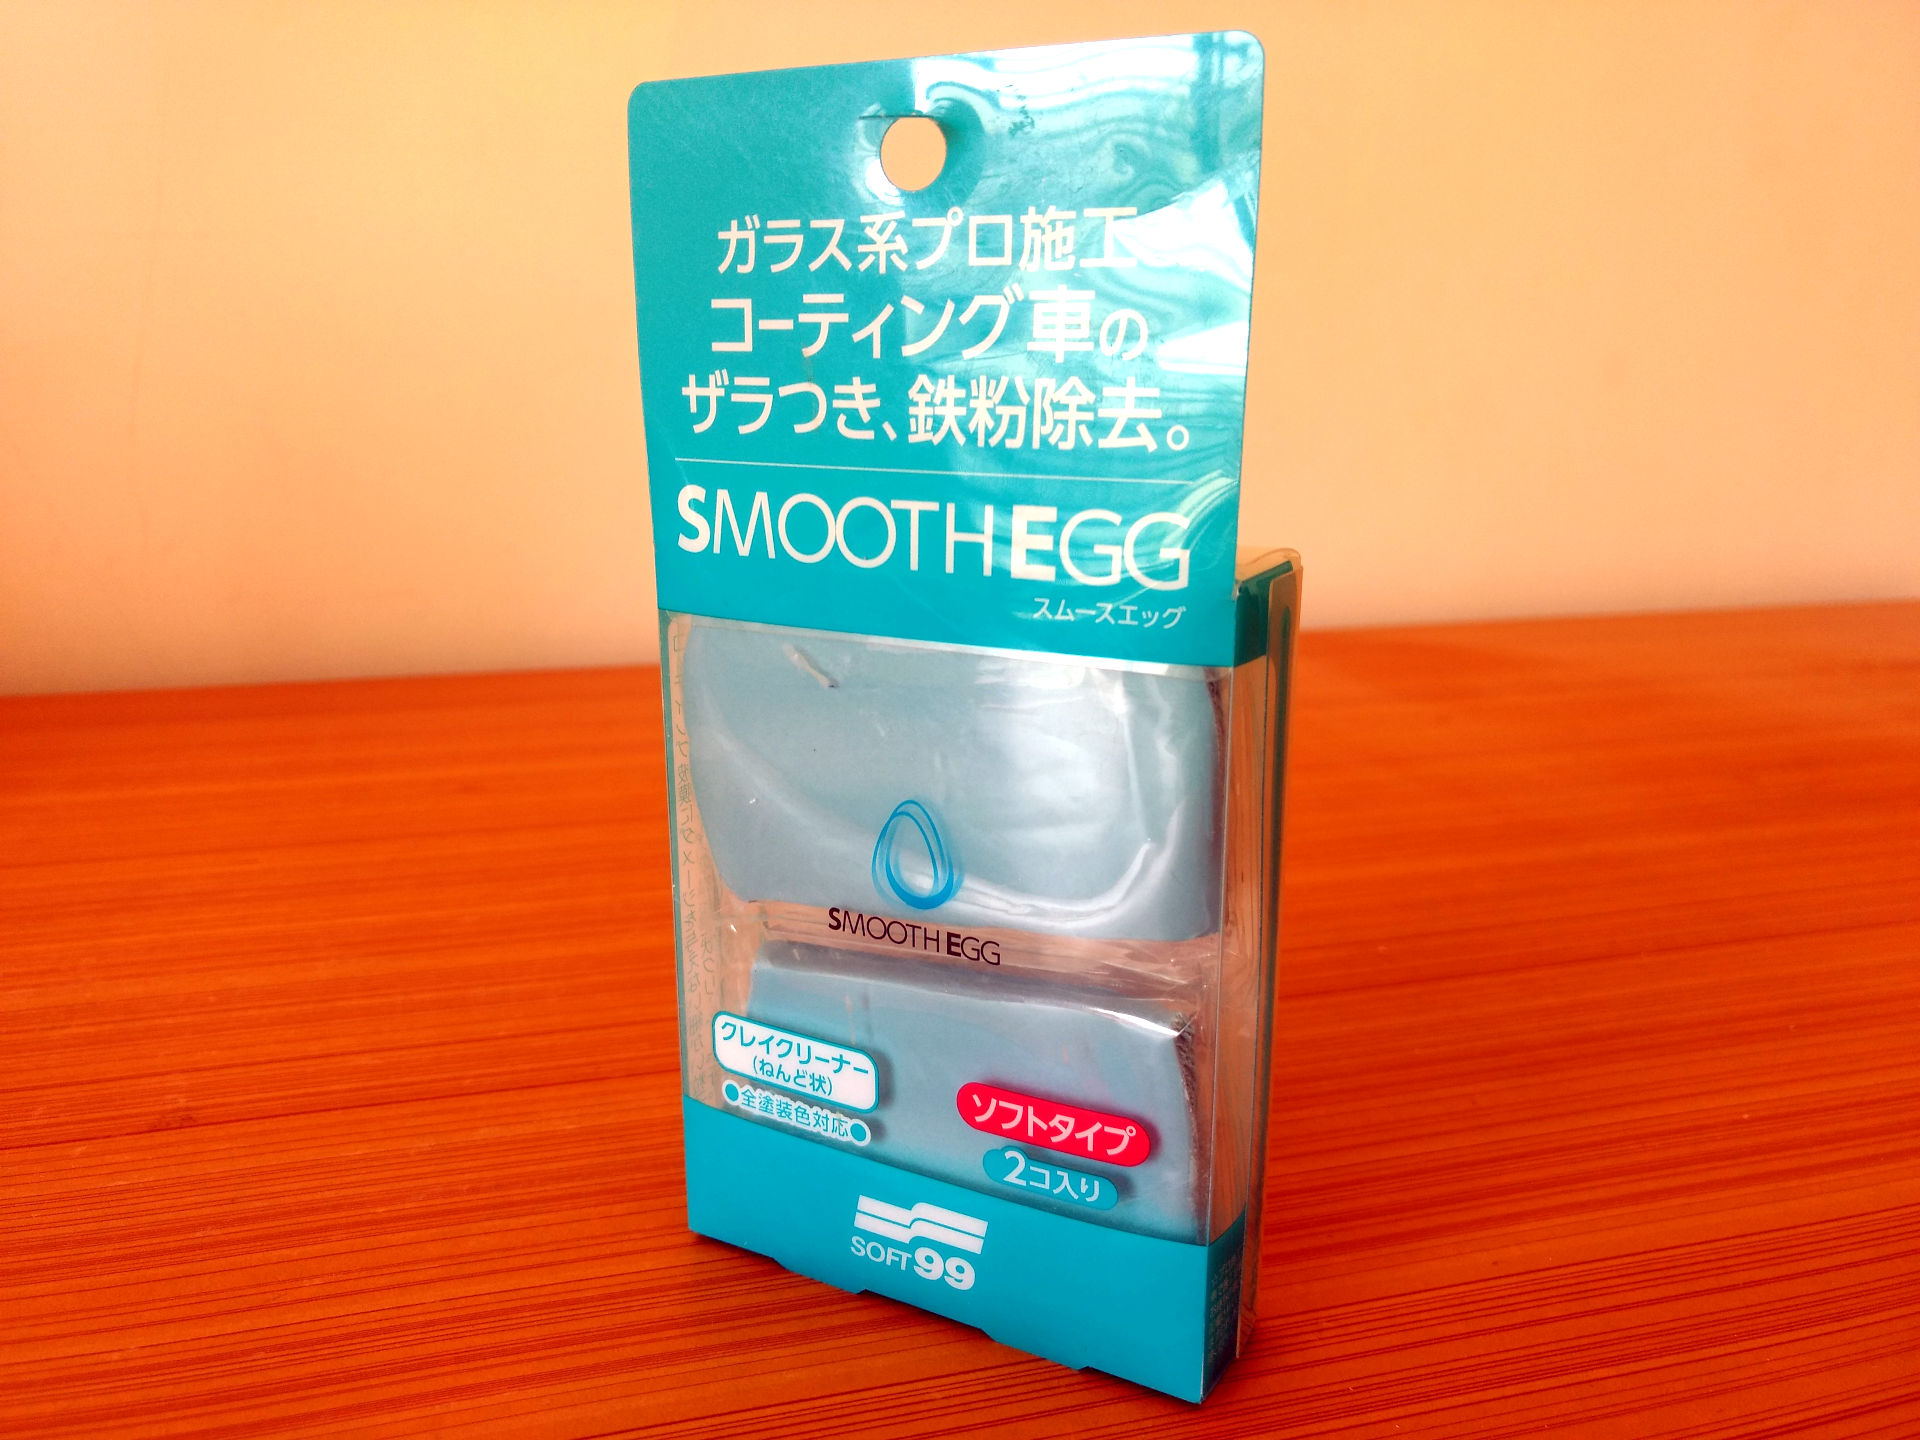 soft99 smooth egg clay bar